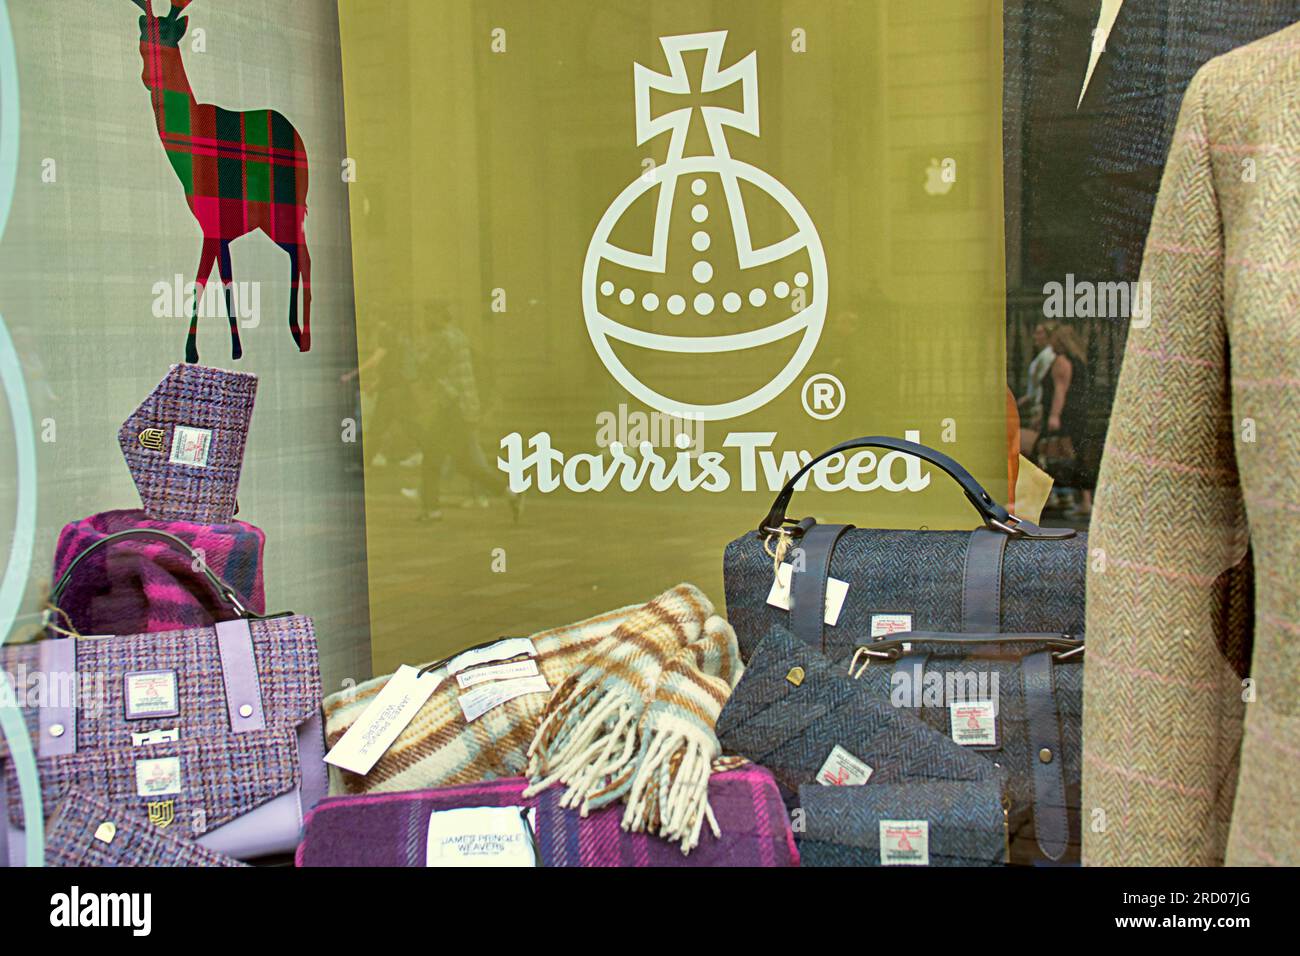 Harris Tweed products in shop window Stock Photo